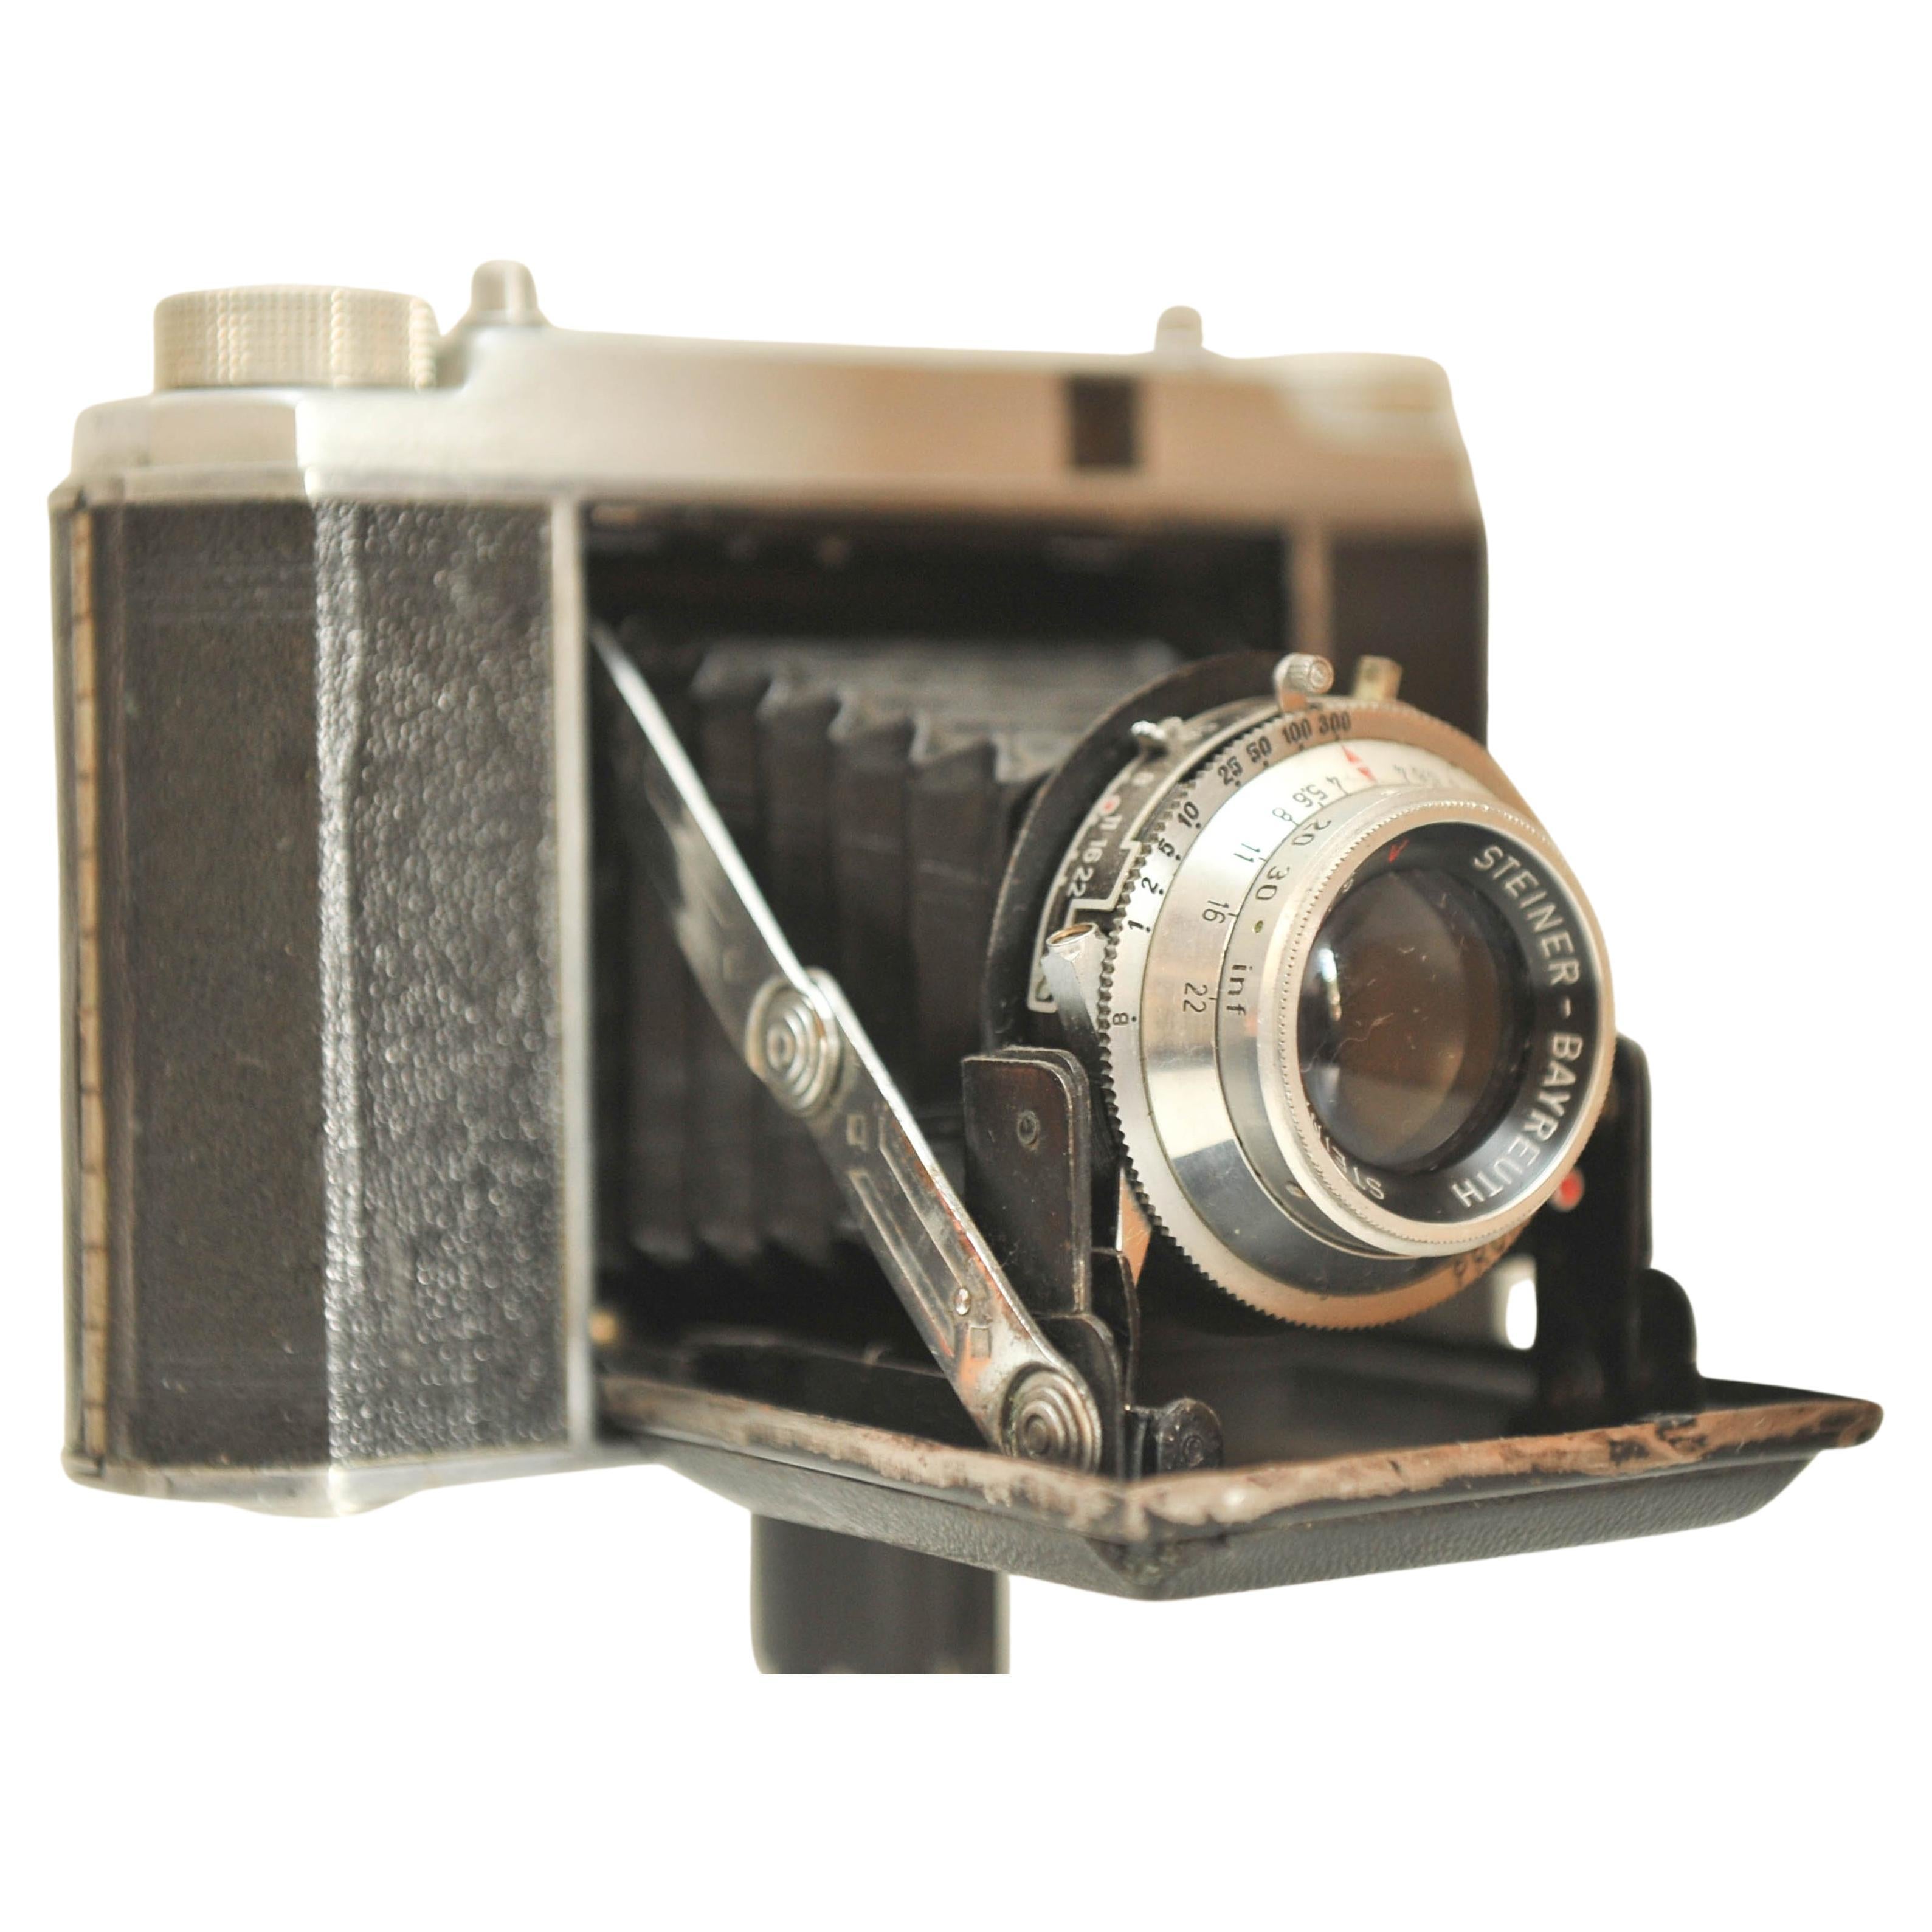 Rare Foitzik Trier Unca 120 Roll Film Bellow Camera Made in Germany 1952 